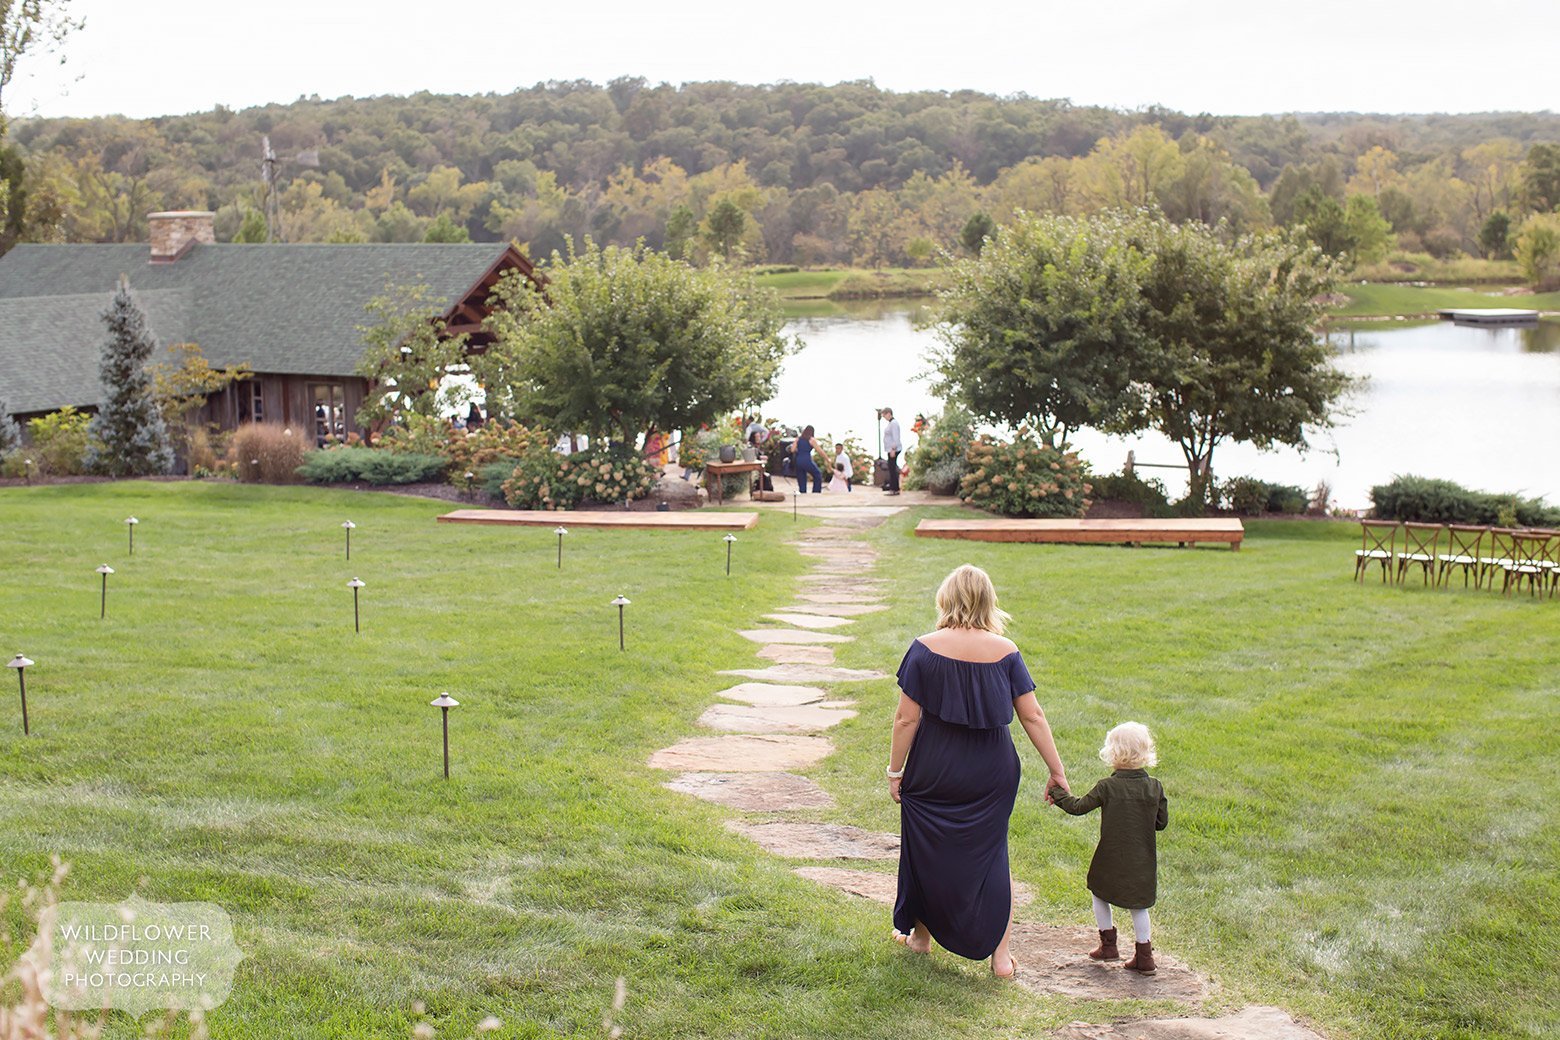 Lakeside wedding ceremony in Hermann, MO in October.